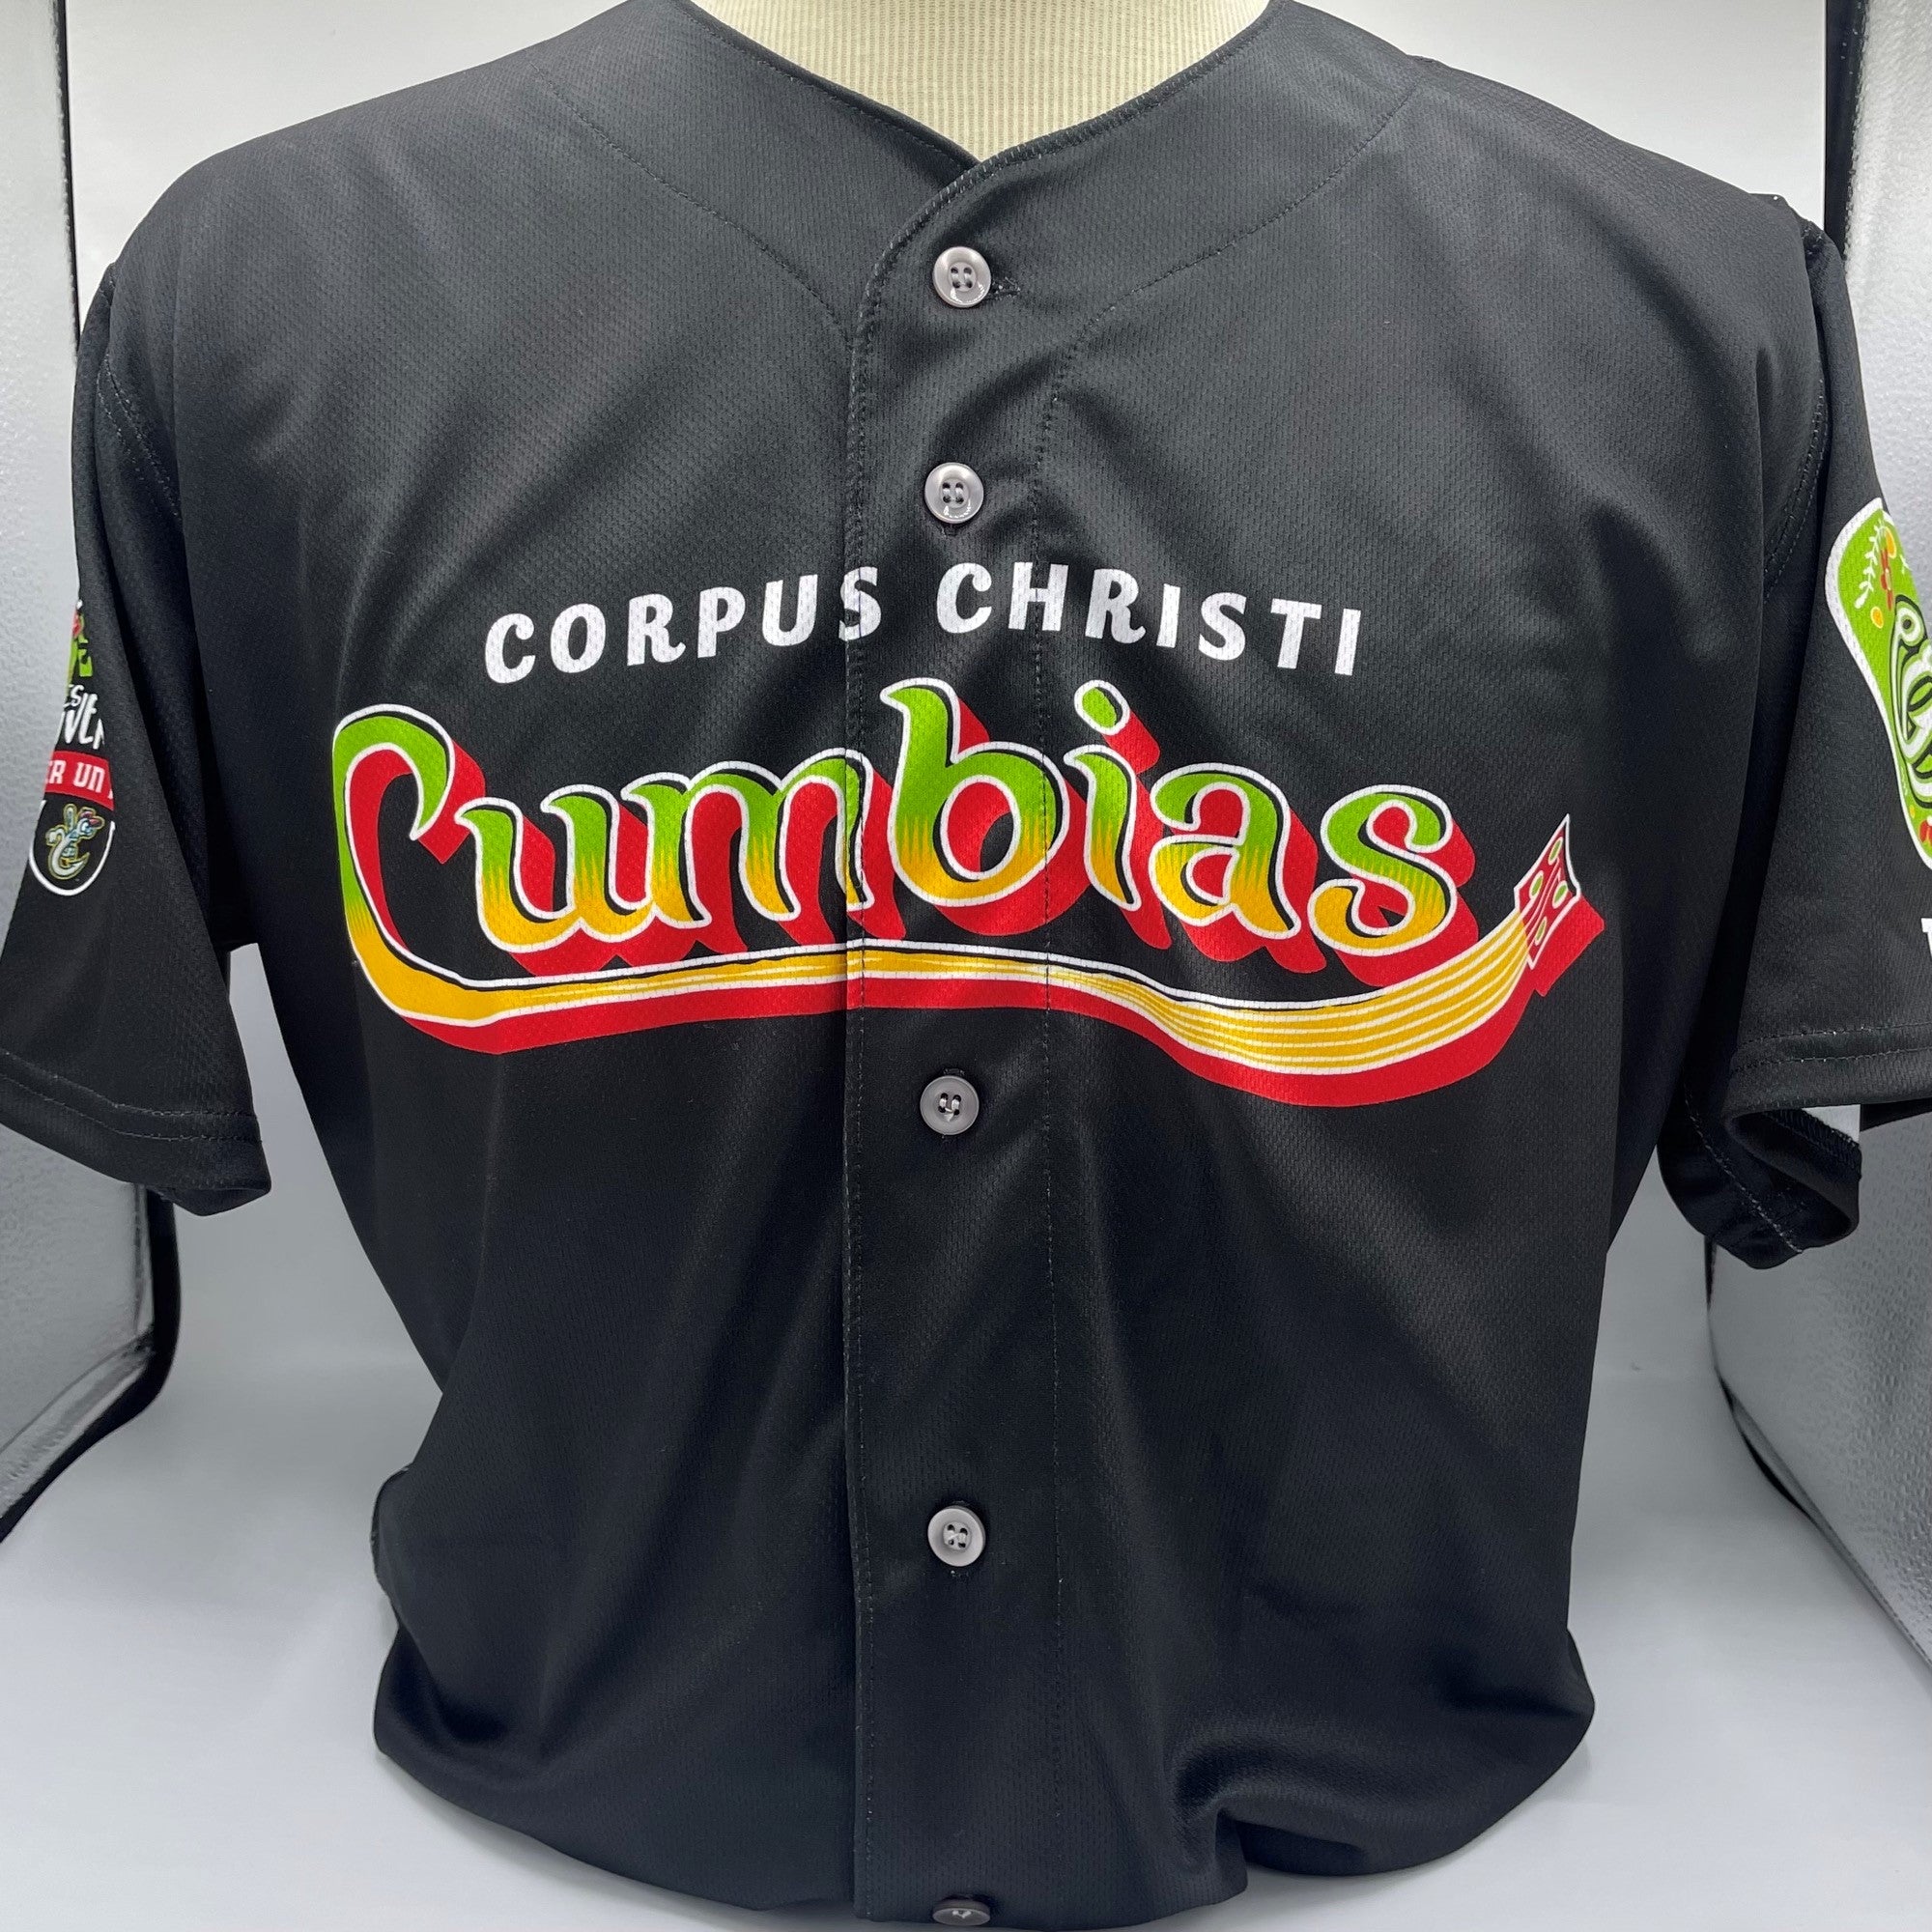 corpus christi hooks uniforms